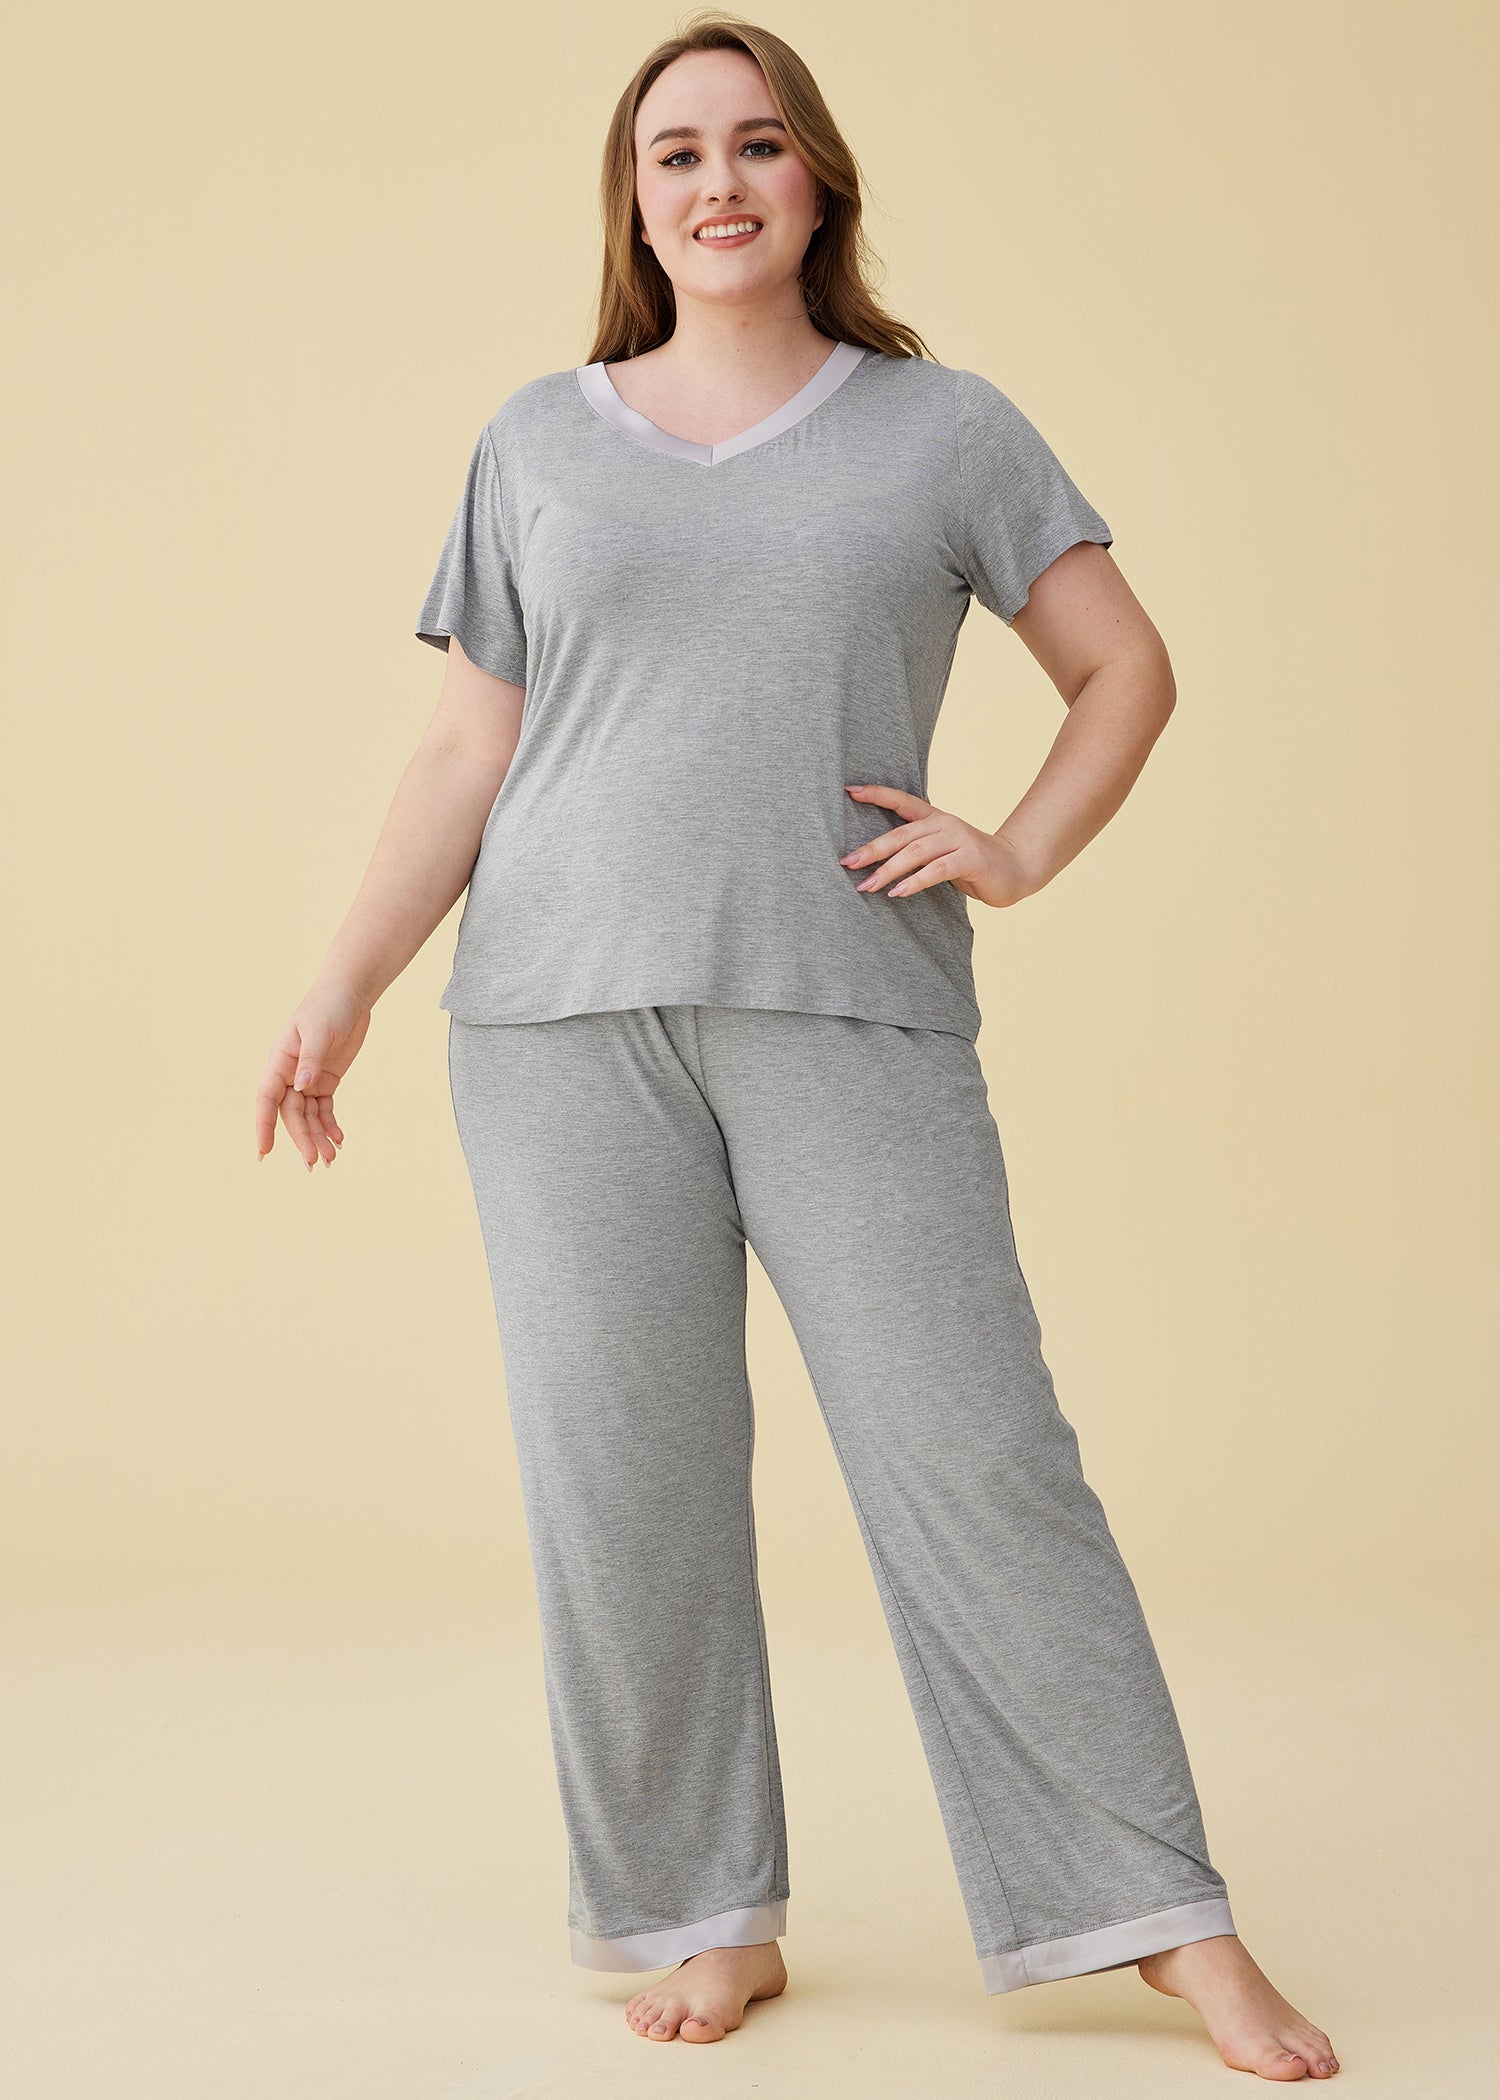 Women's V-Neck Sleepwear Short Sleeves Top with Pants Pajama Set – Latuza